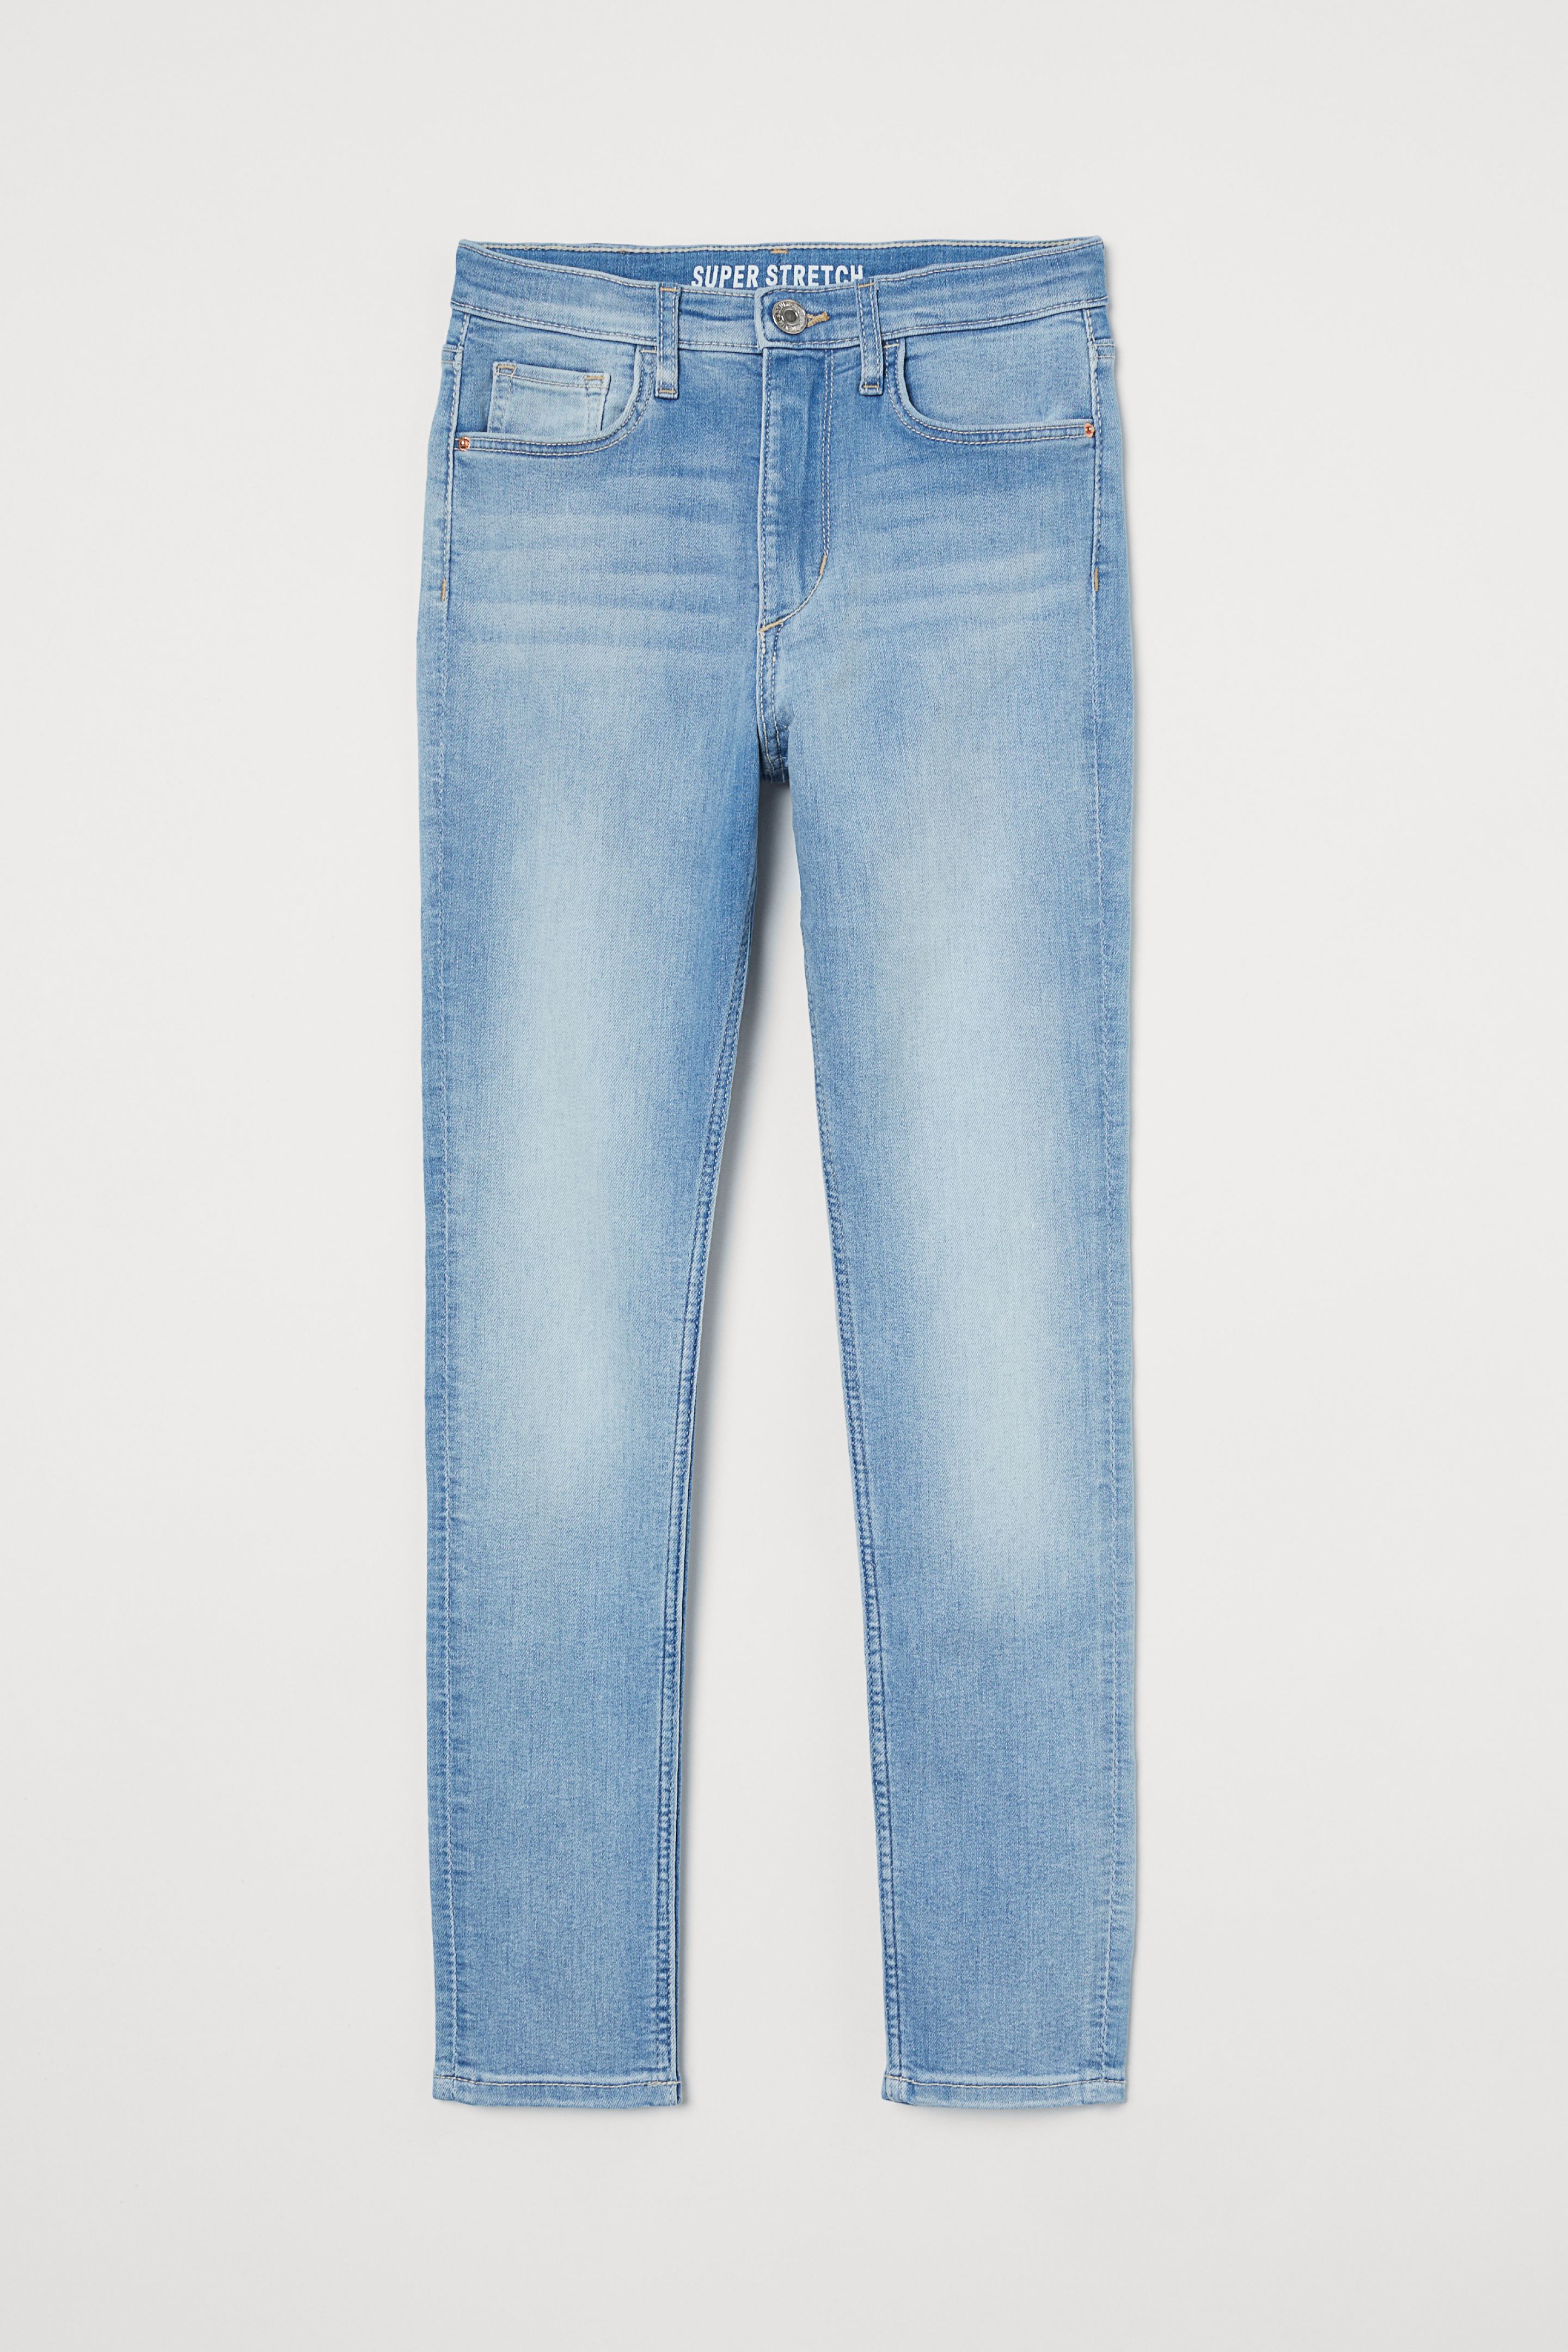 شلوار جینز 28846 سایز 7 تا 14 سال مارک H&M